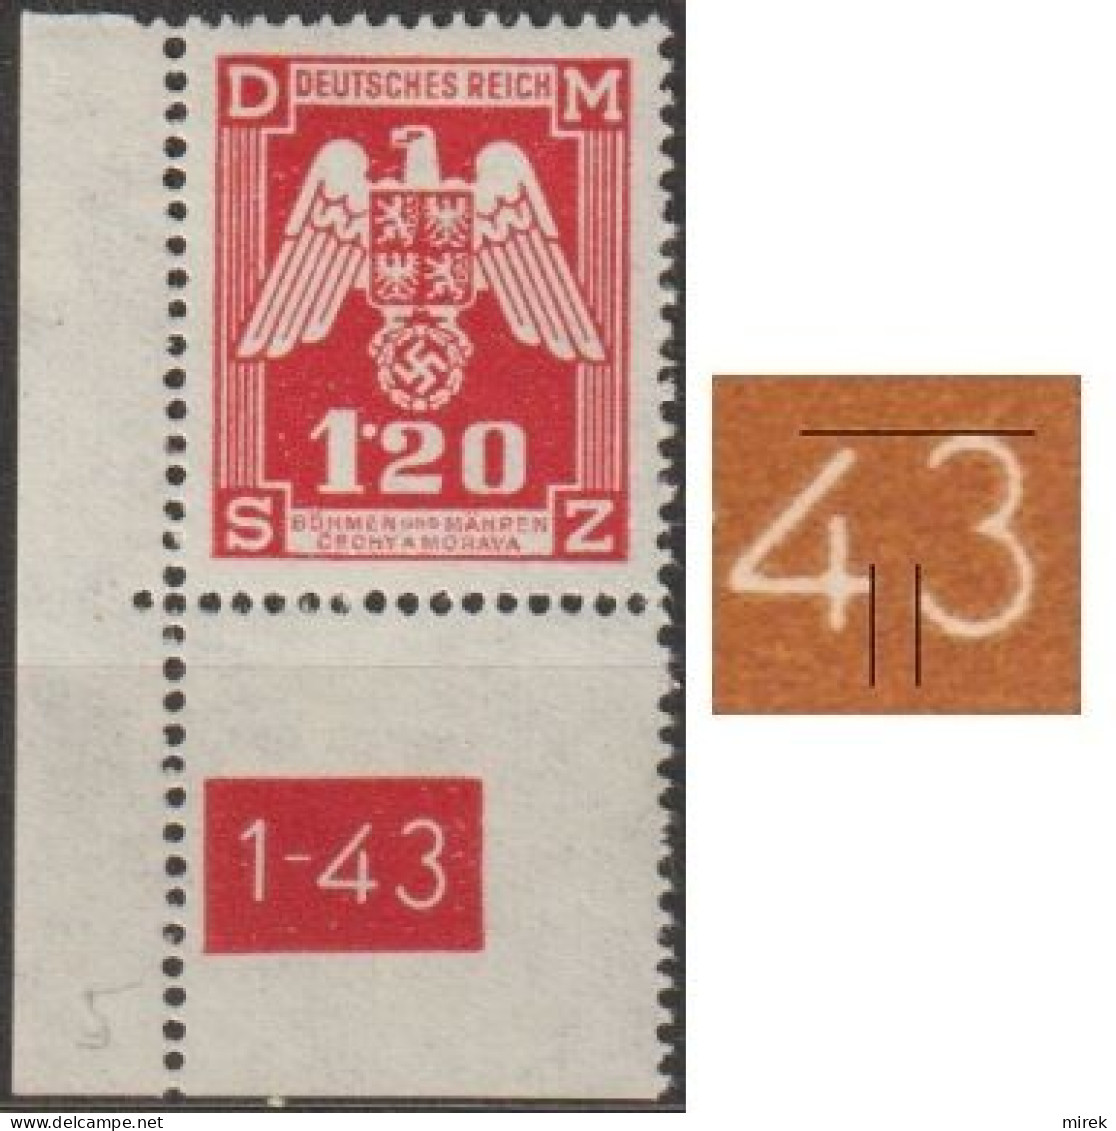 026/ Pof. SL 19, Corner Stamp, Plate Number 1-43, Type 2, Var. 5 - Neufs